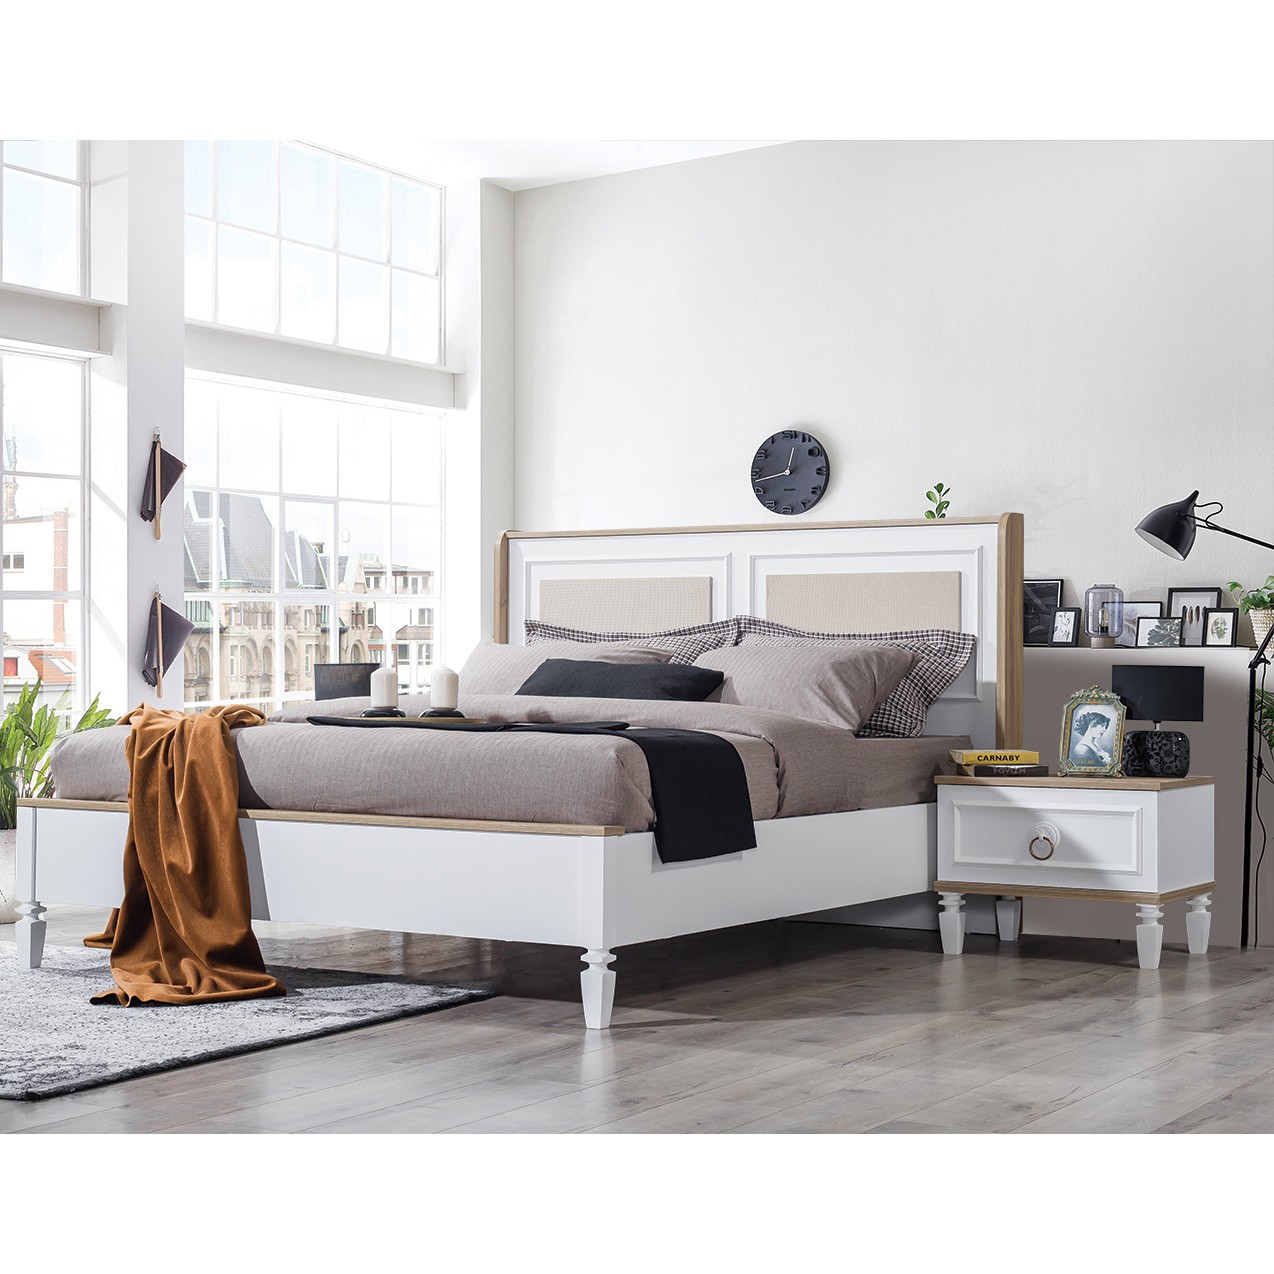 Mila Vol3 Bedroom (Bed With Storage 160x200cm)